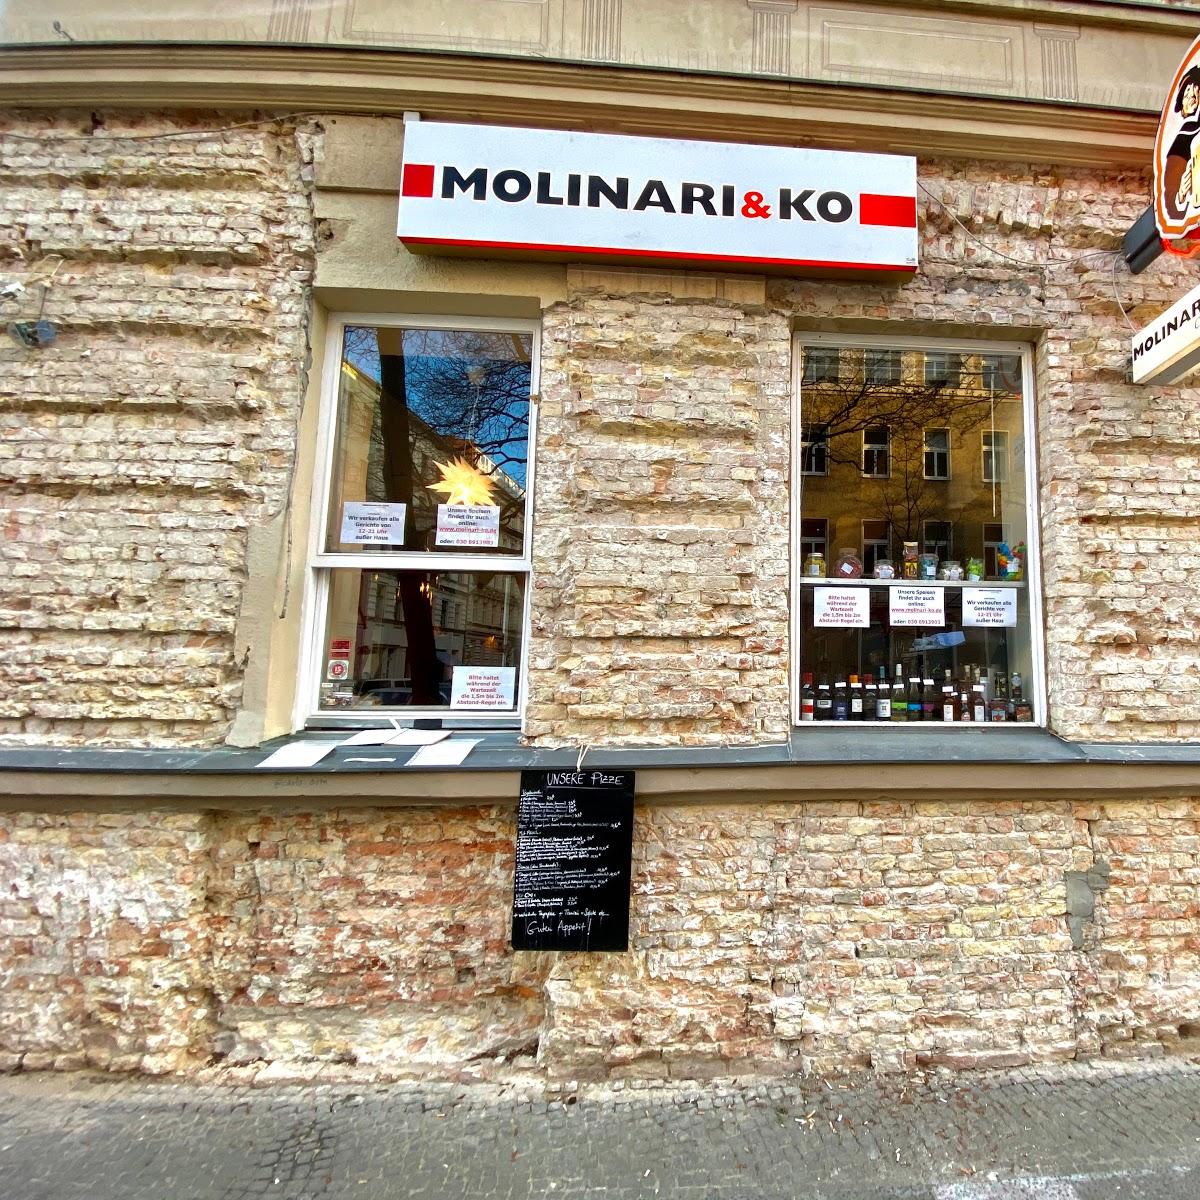 Restaurant "Molinari & Ko" in Berlin